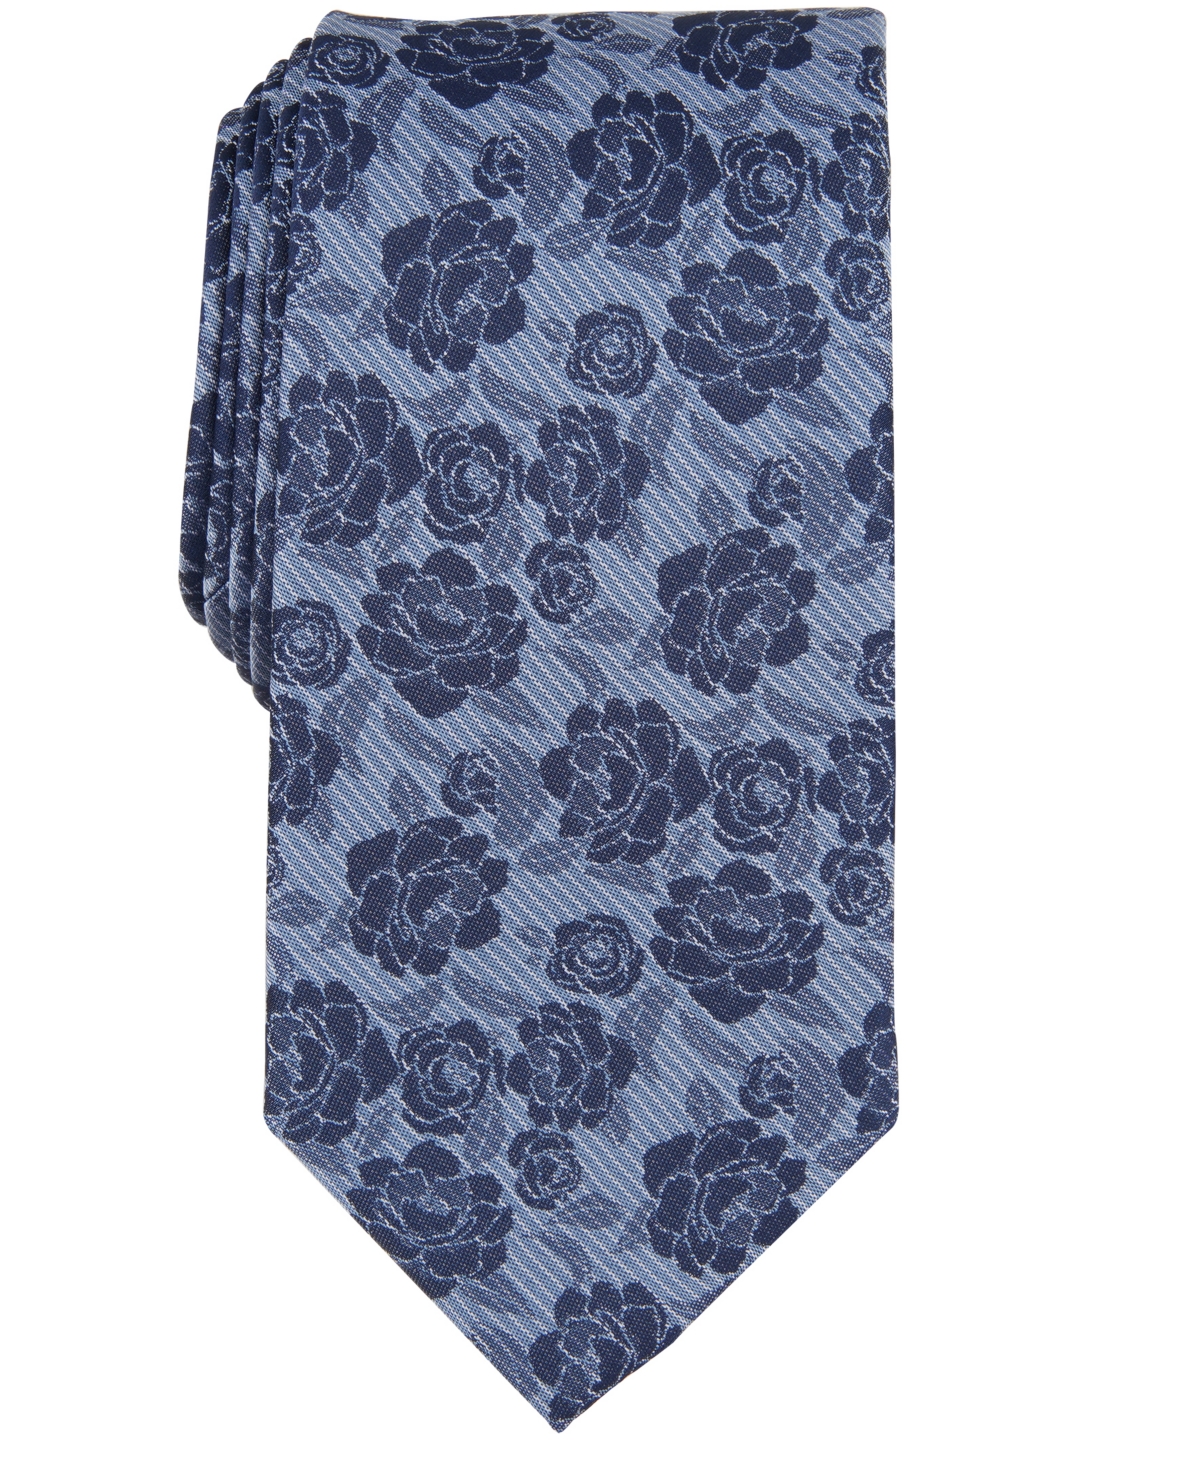 Men's Moccasin Floral Tie - Blue